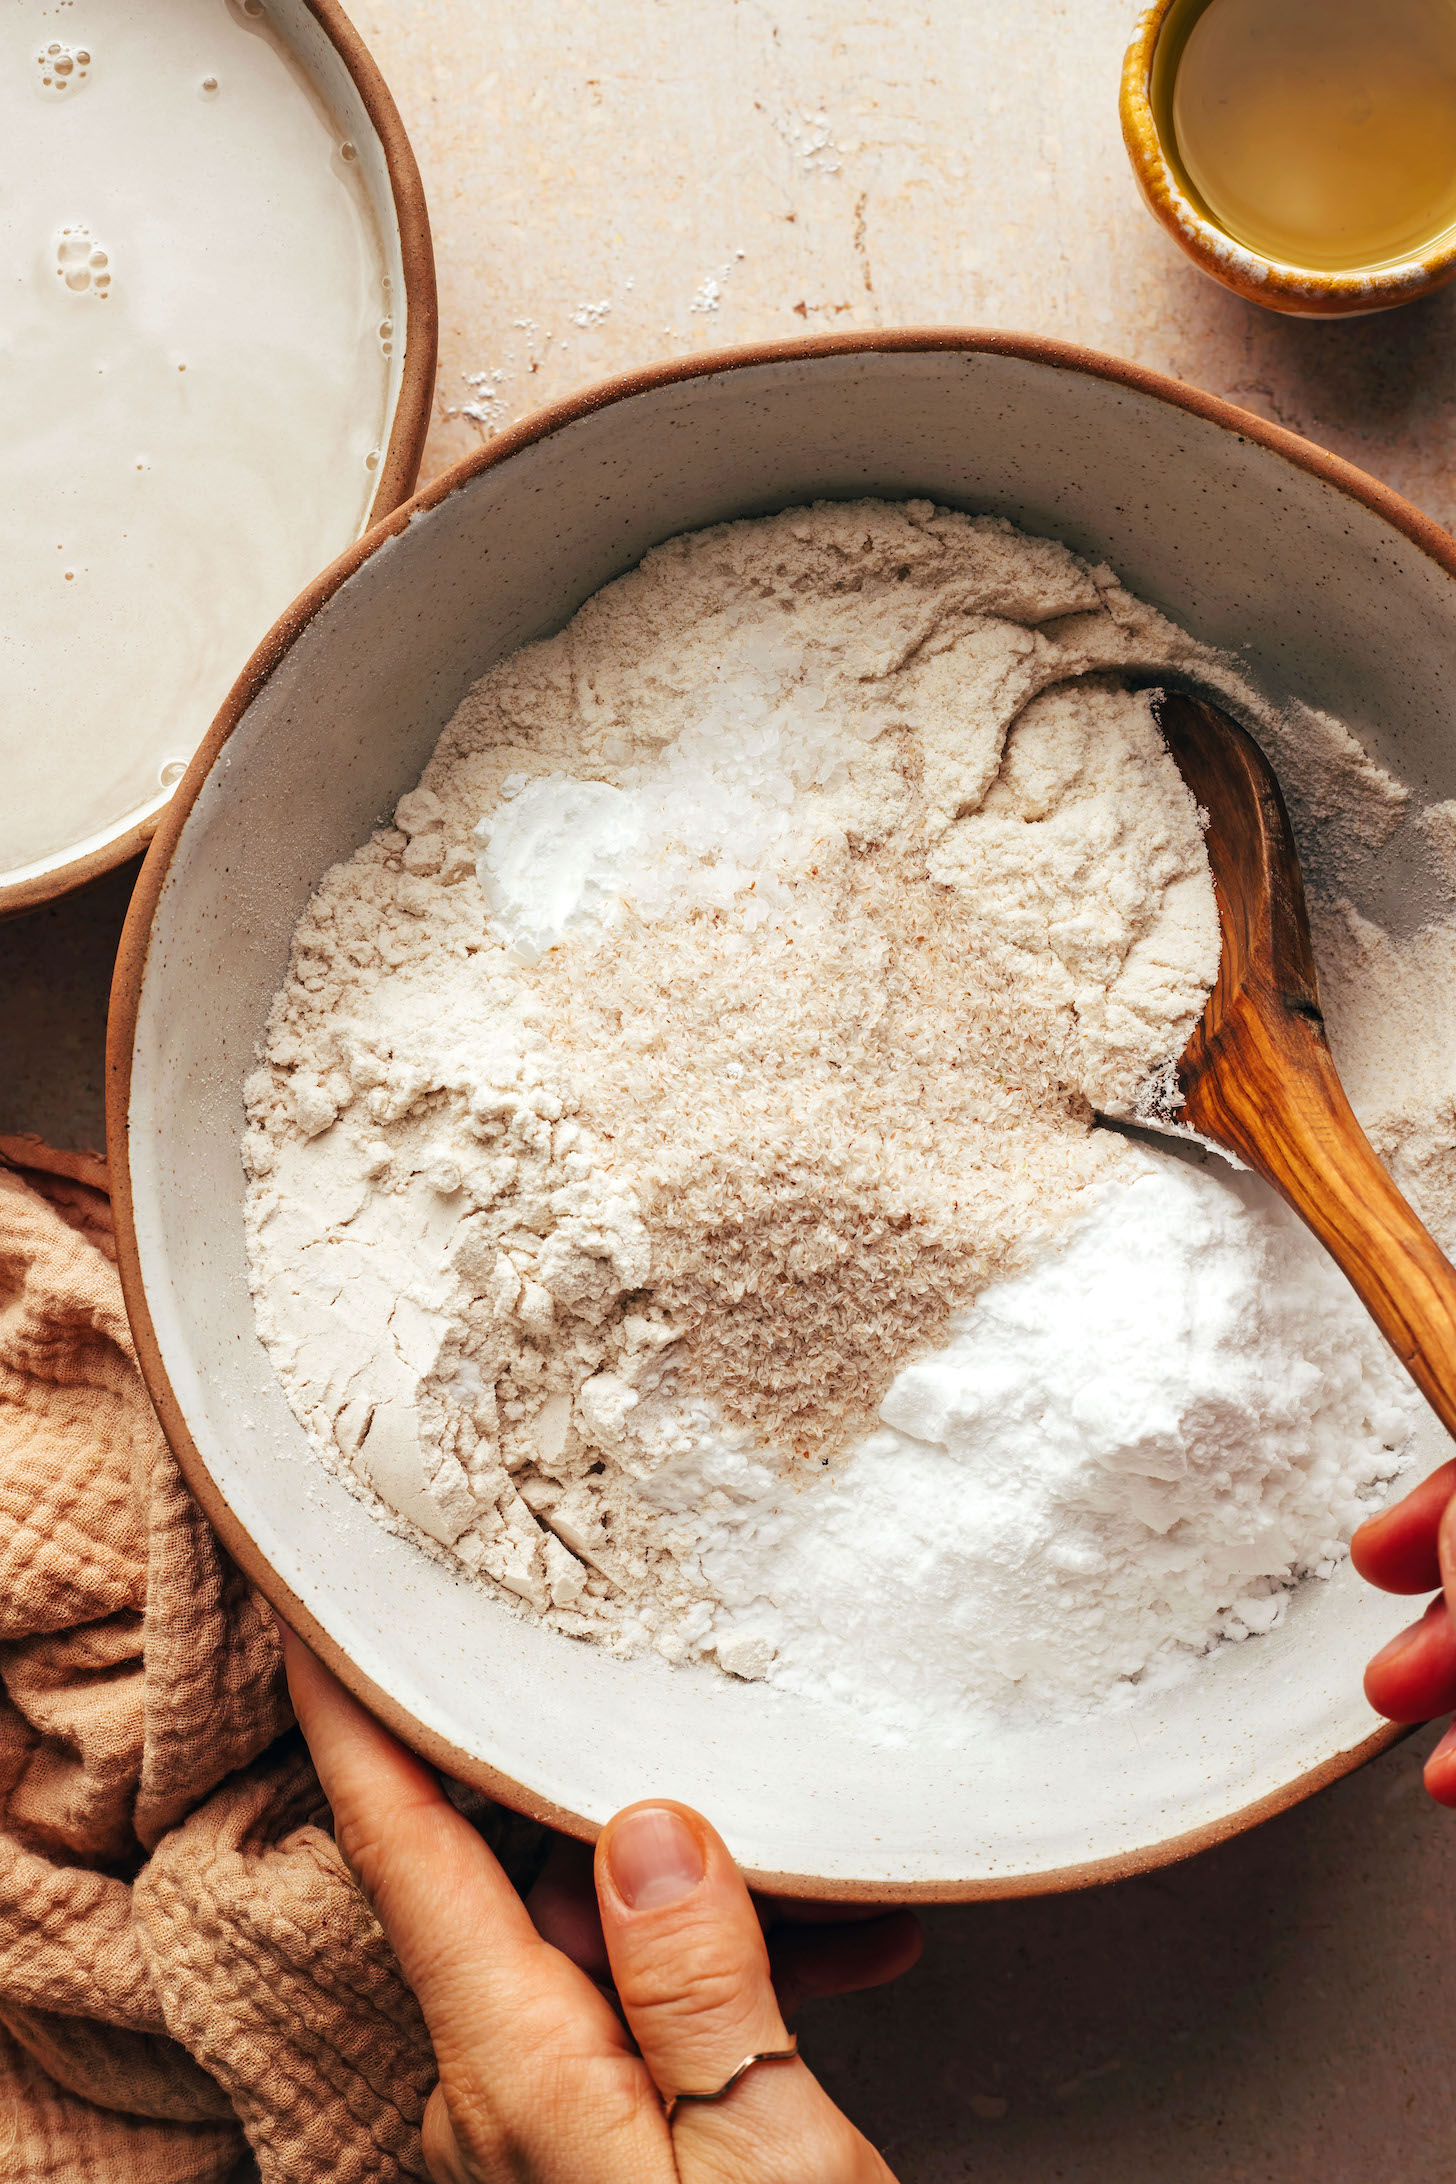 Stir gluten-free flour, psyllium husk, salt and baking powder in a bowl